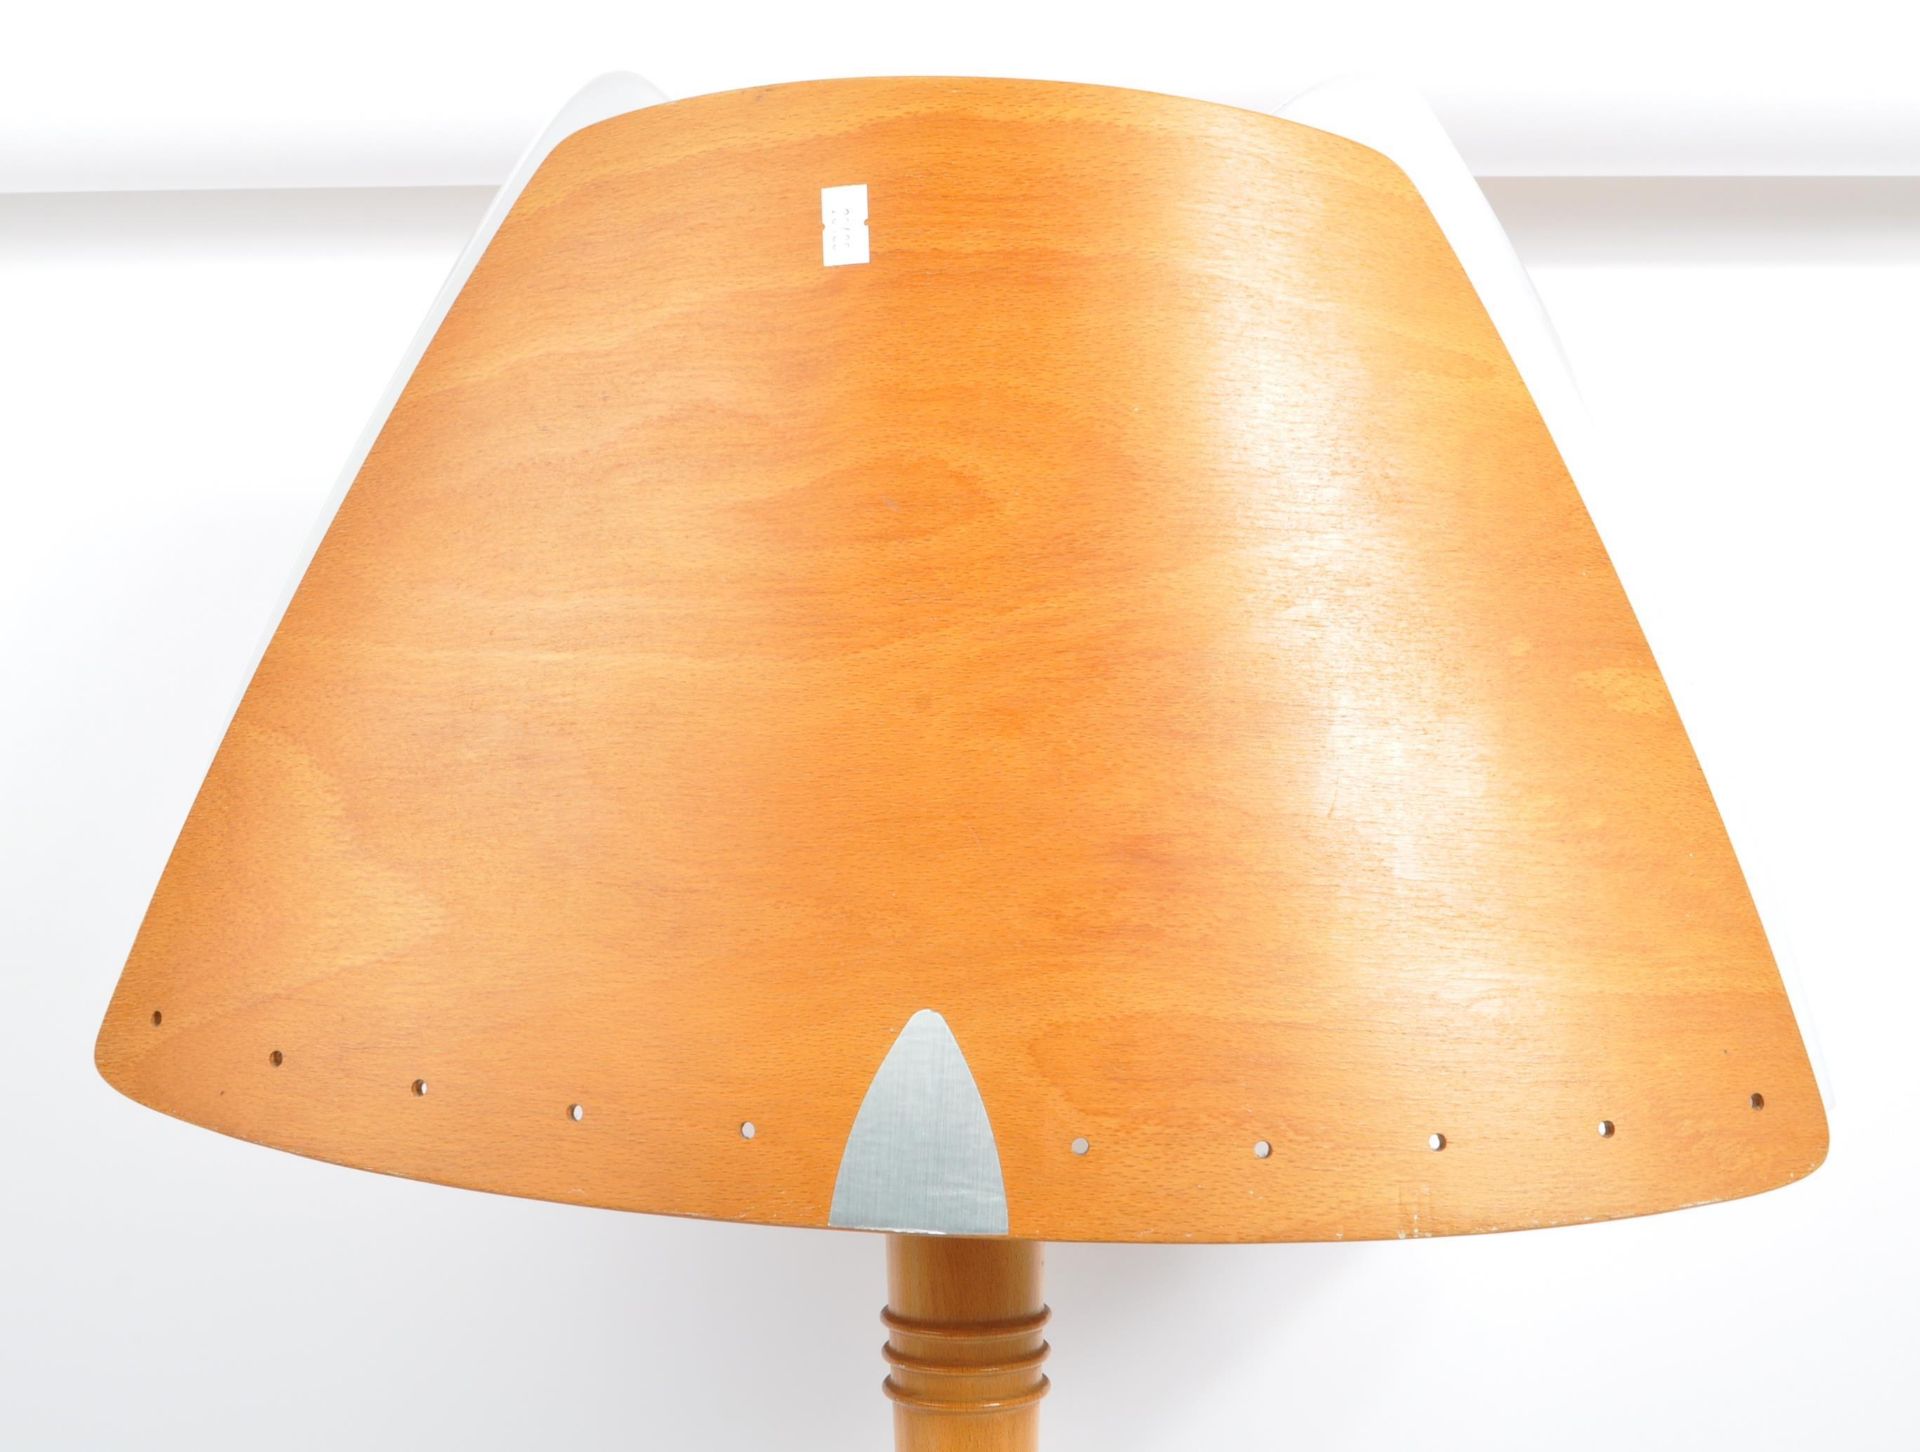 RETRO 20TH CENTURY TABLE LAMP BY SOREN ERIKSEN FOR LUCID - Image 5 of 6